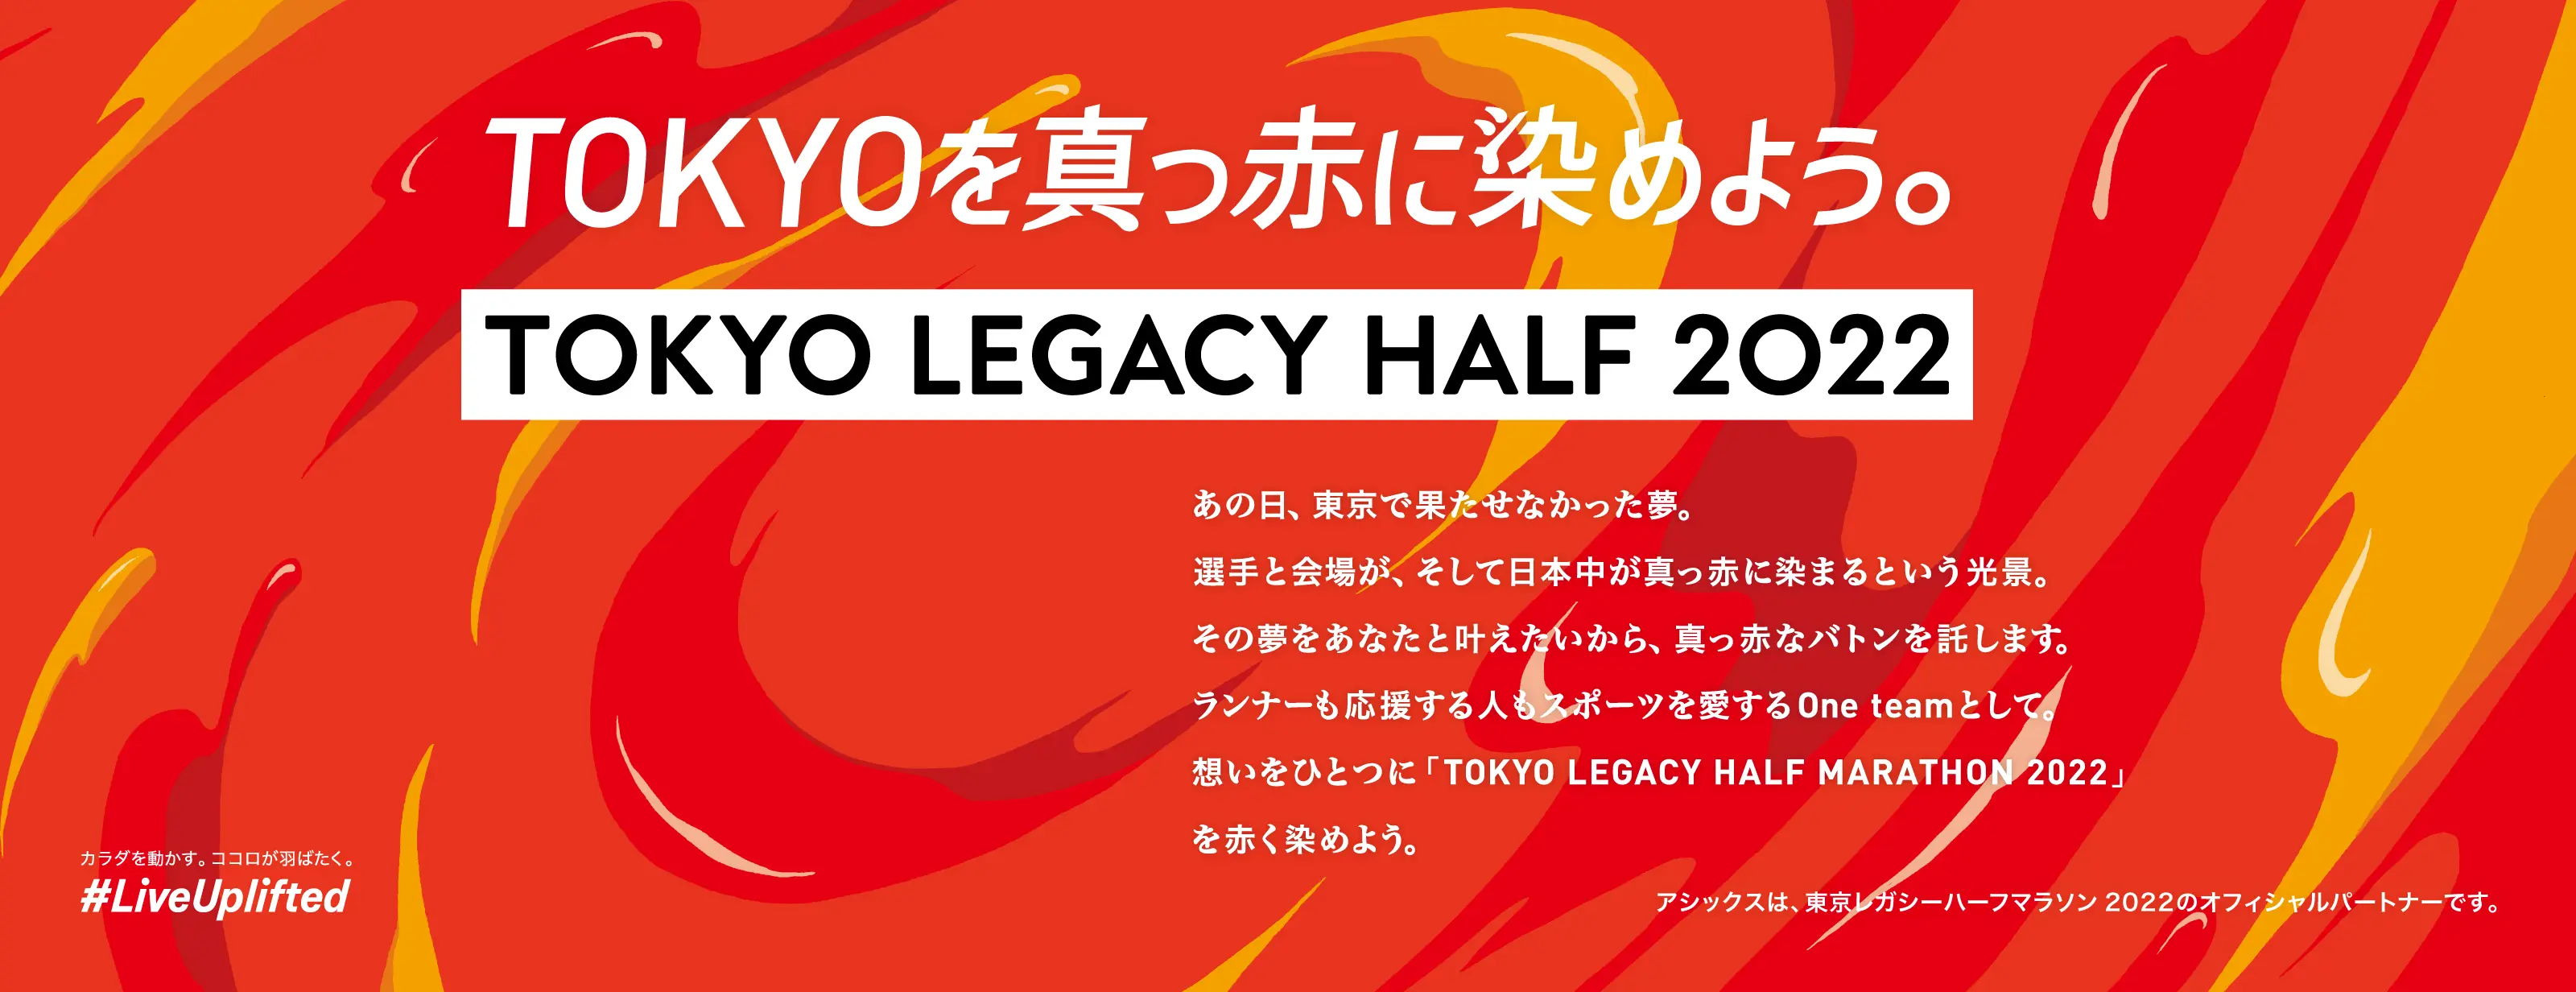 TOKYOを真っ赤に染めよう。TOKYO LEGACY HALF 2022 HERO BANNER